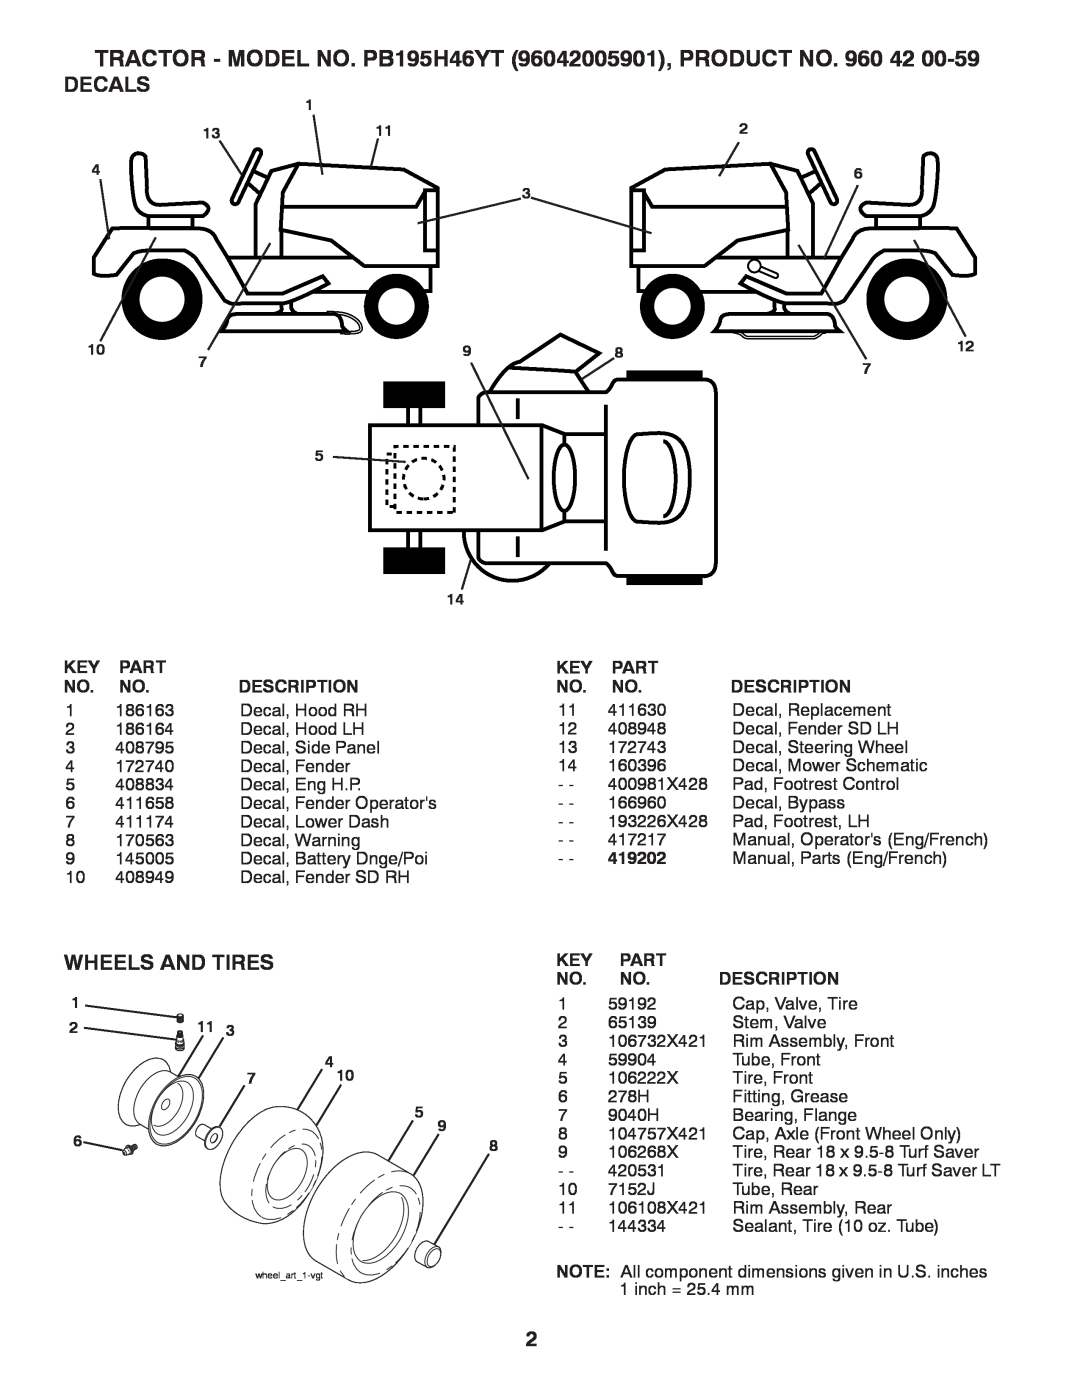 Poulan TRACTOR - MODEL NO. PB195H46YT 96042005901, PRODUCT NO, Decals, Wheels And Tires, Part, Description, 419202 